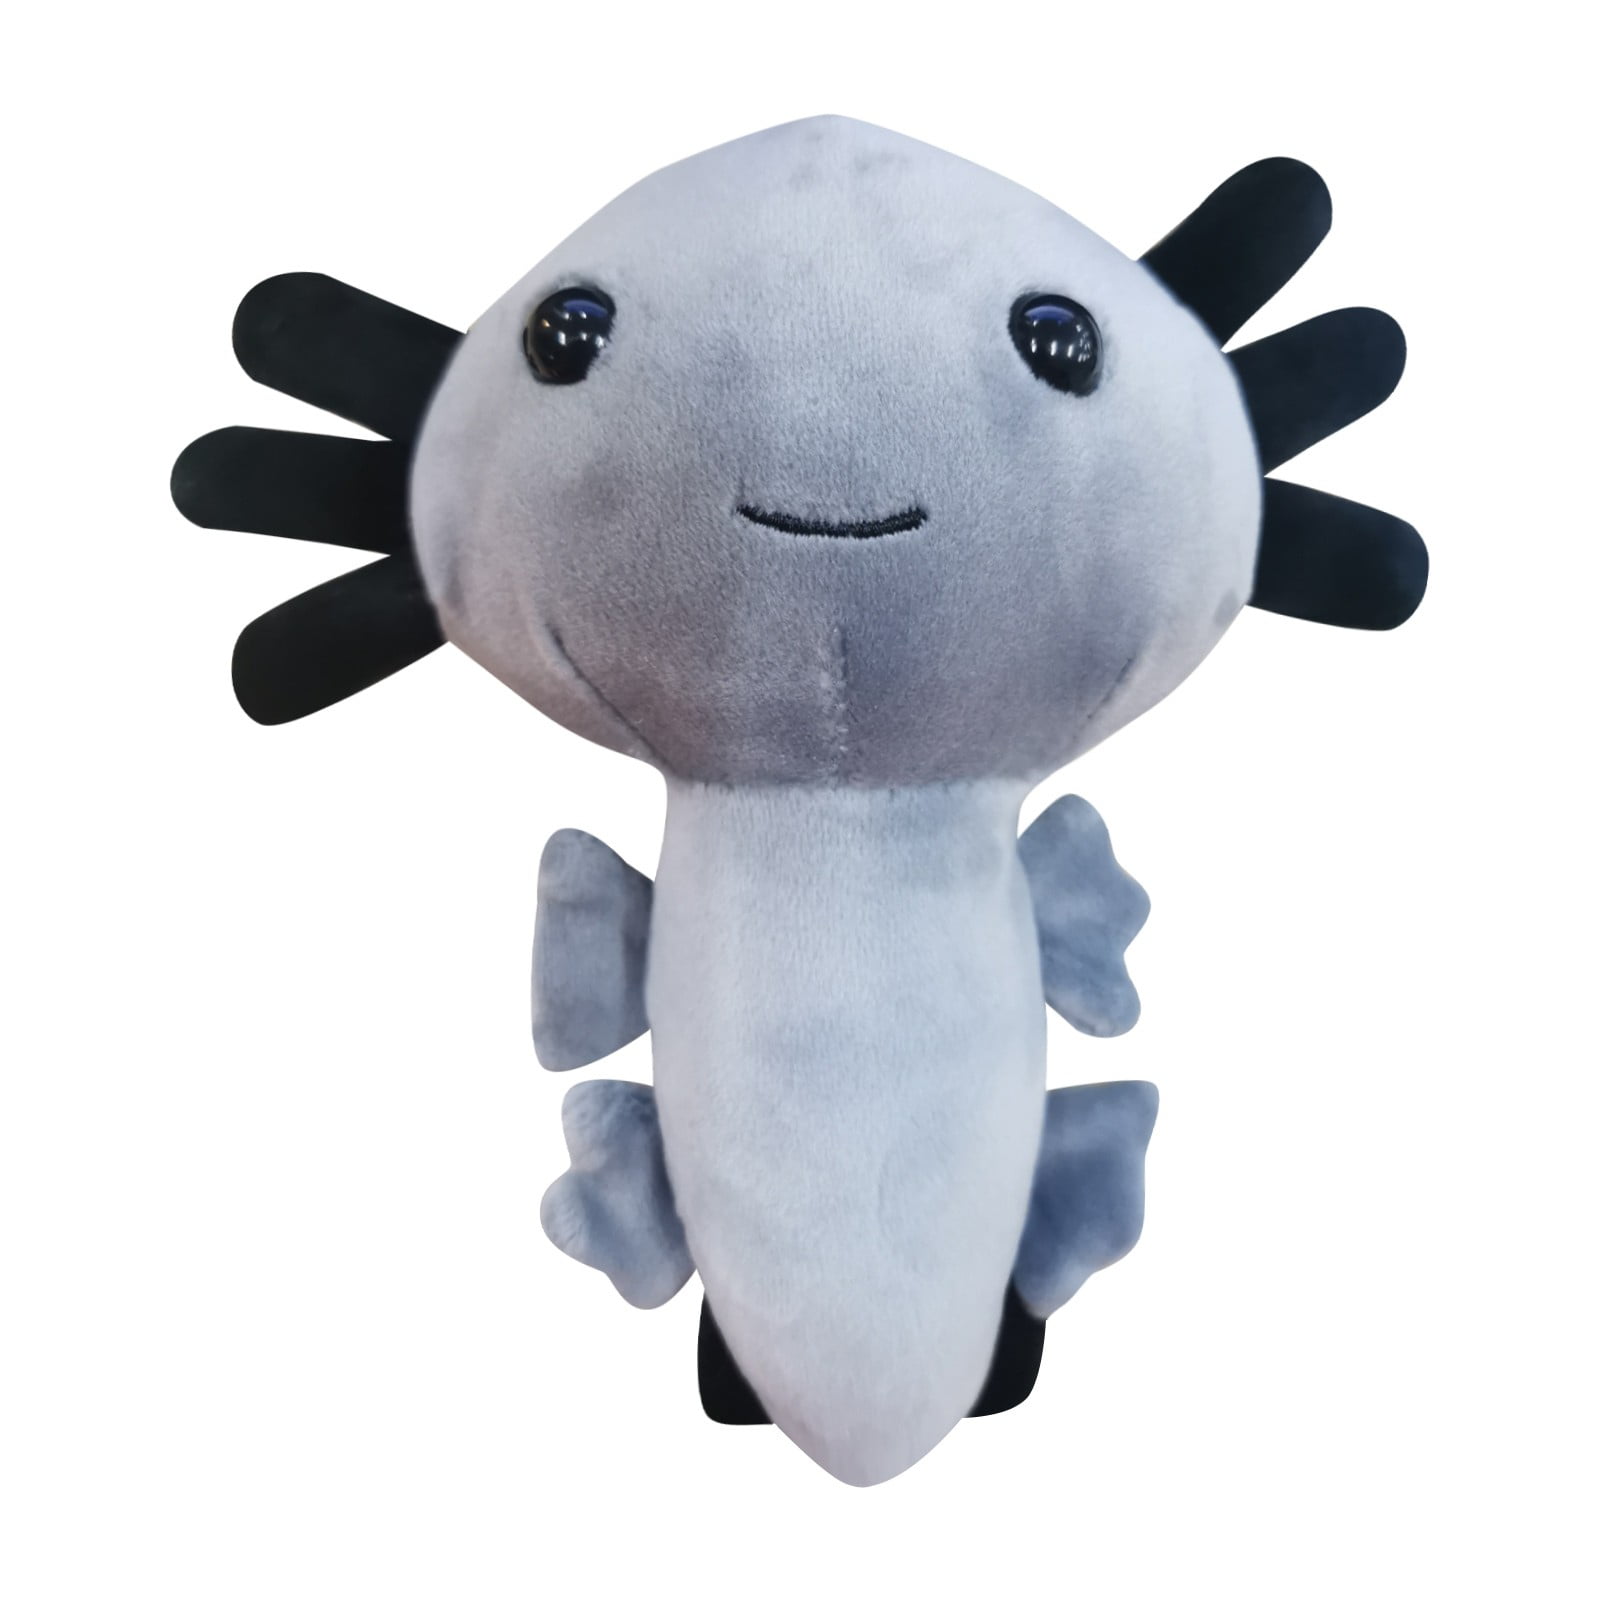 7.8Inch Cute Axolotl Plush Toy Handmade Animal Stuffed Doll for Kids Gift 